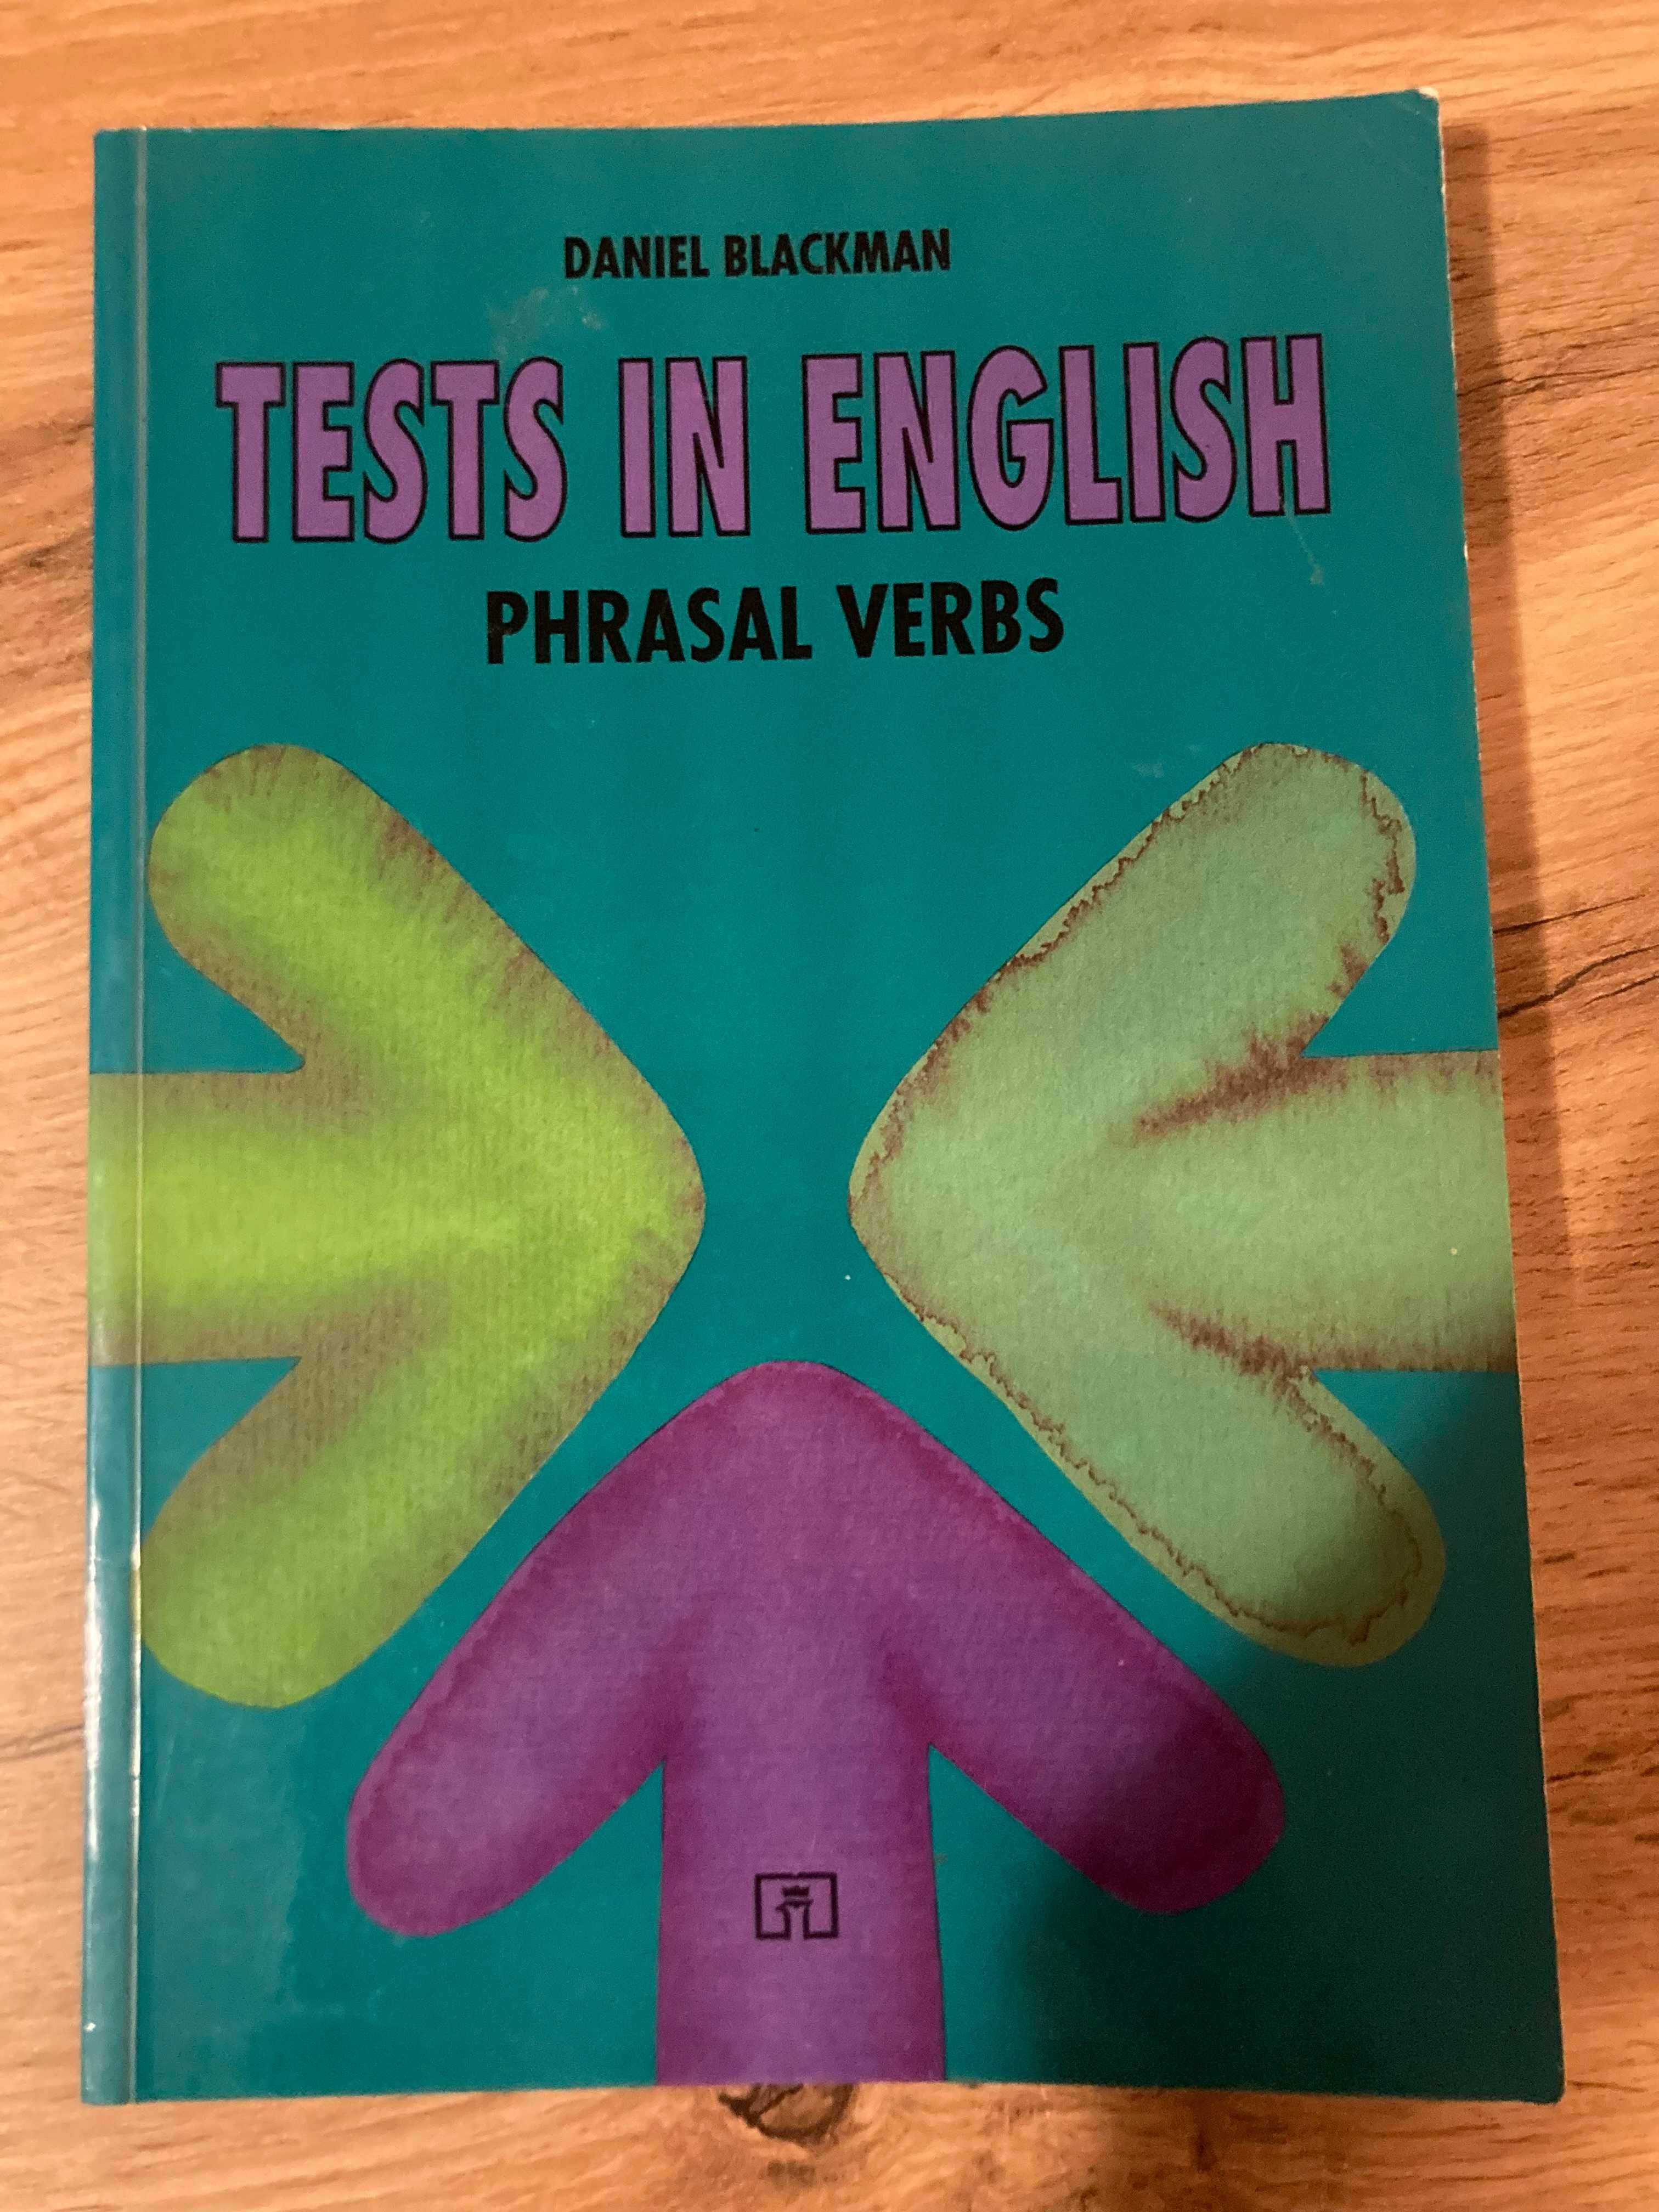 Tests in English Phrasal Verbs - Daniel Blackman